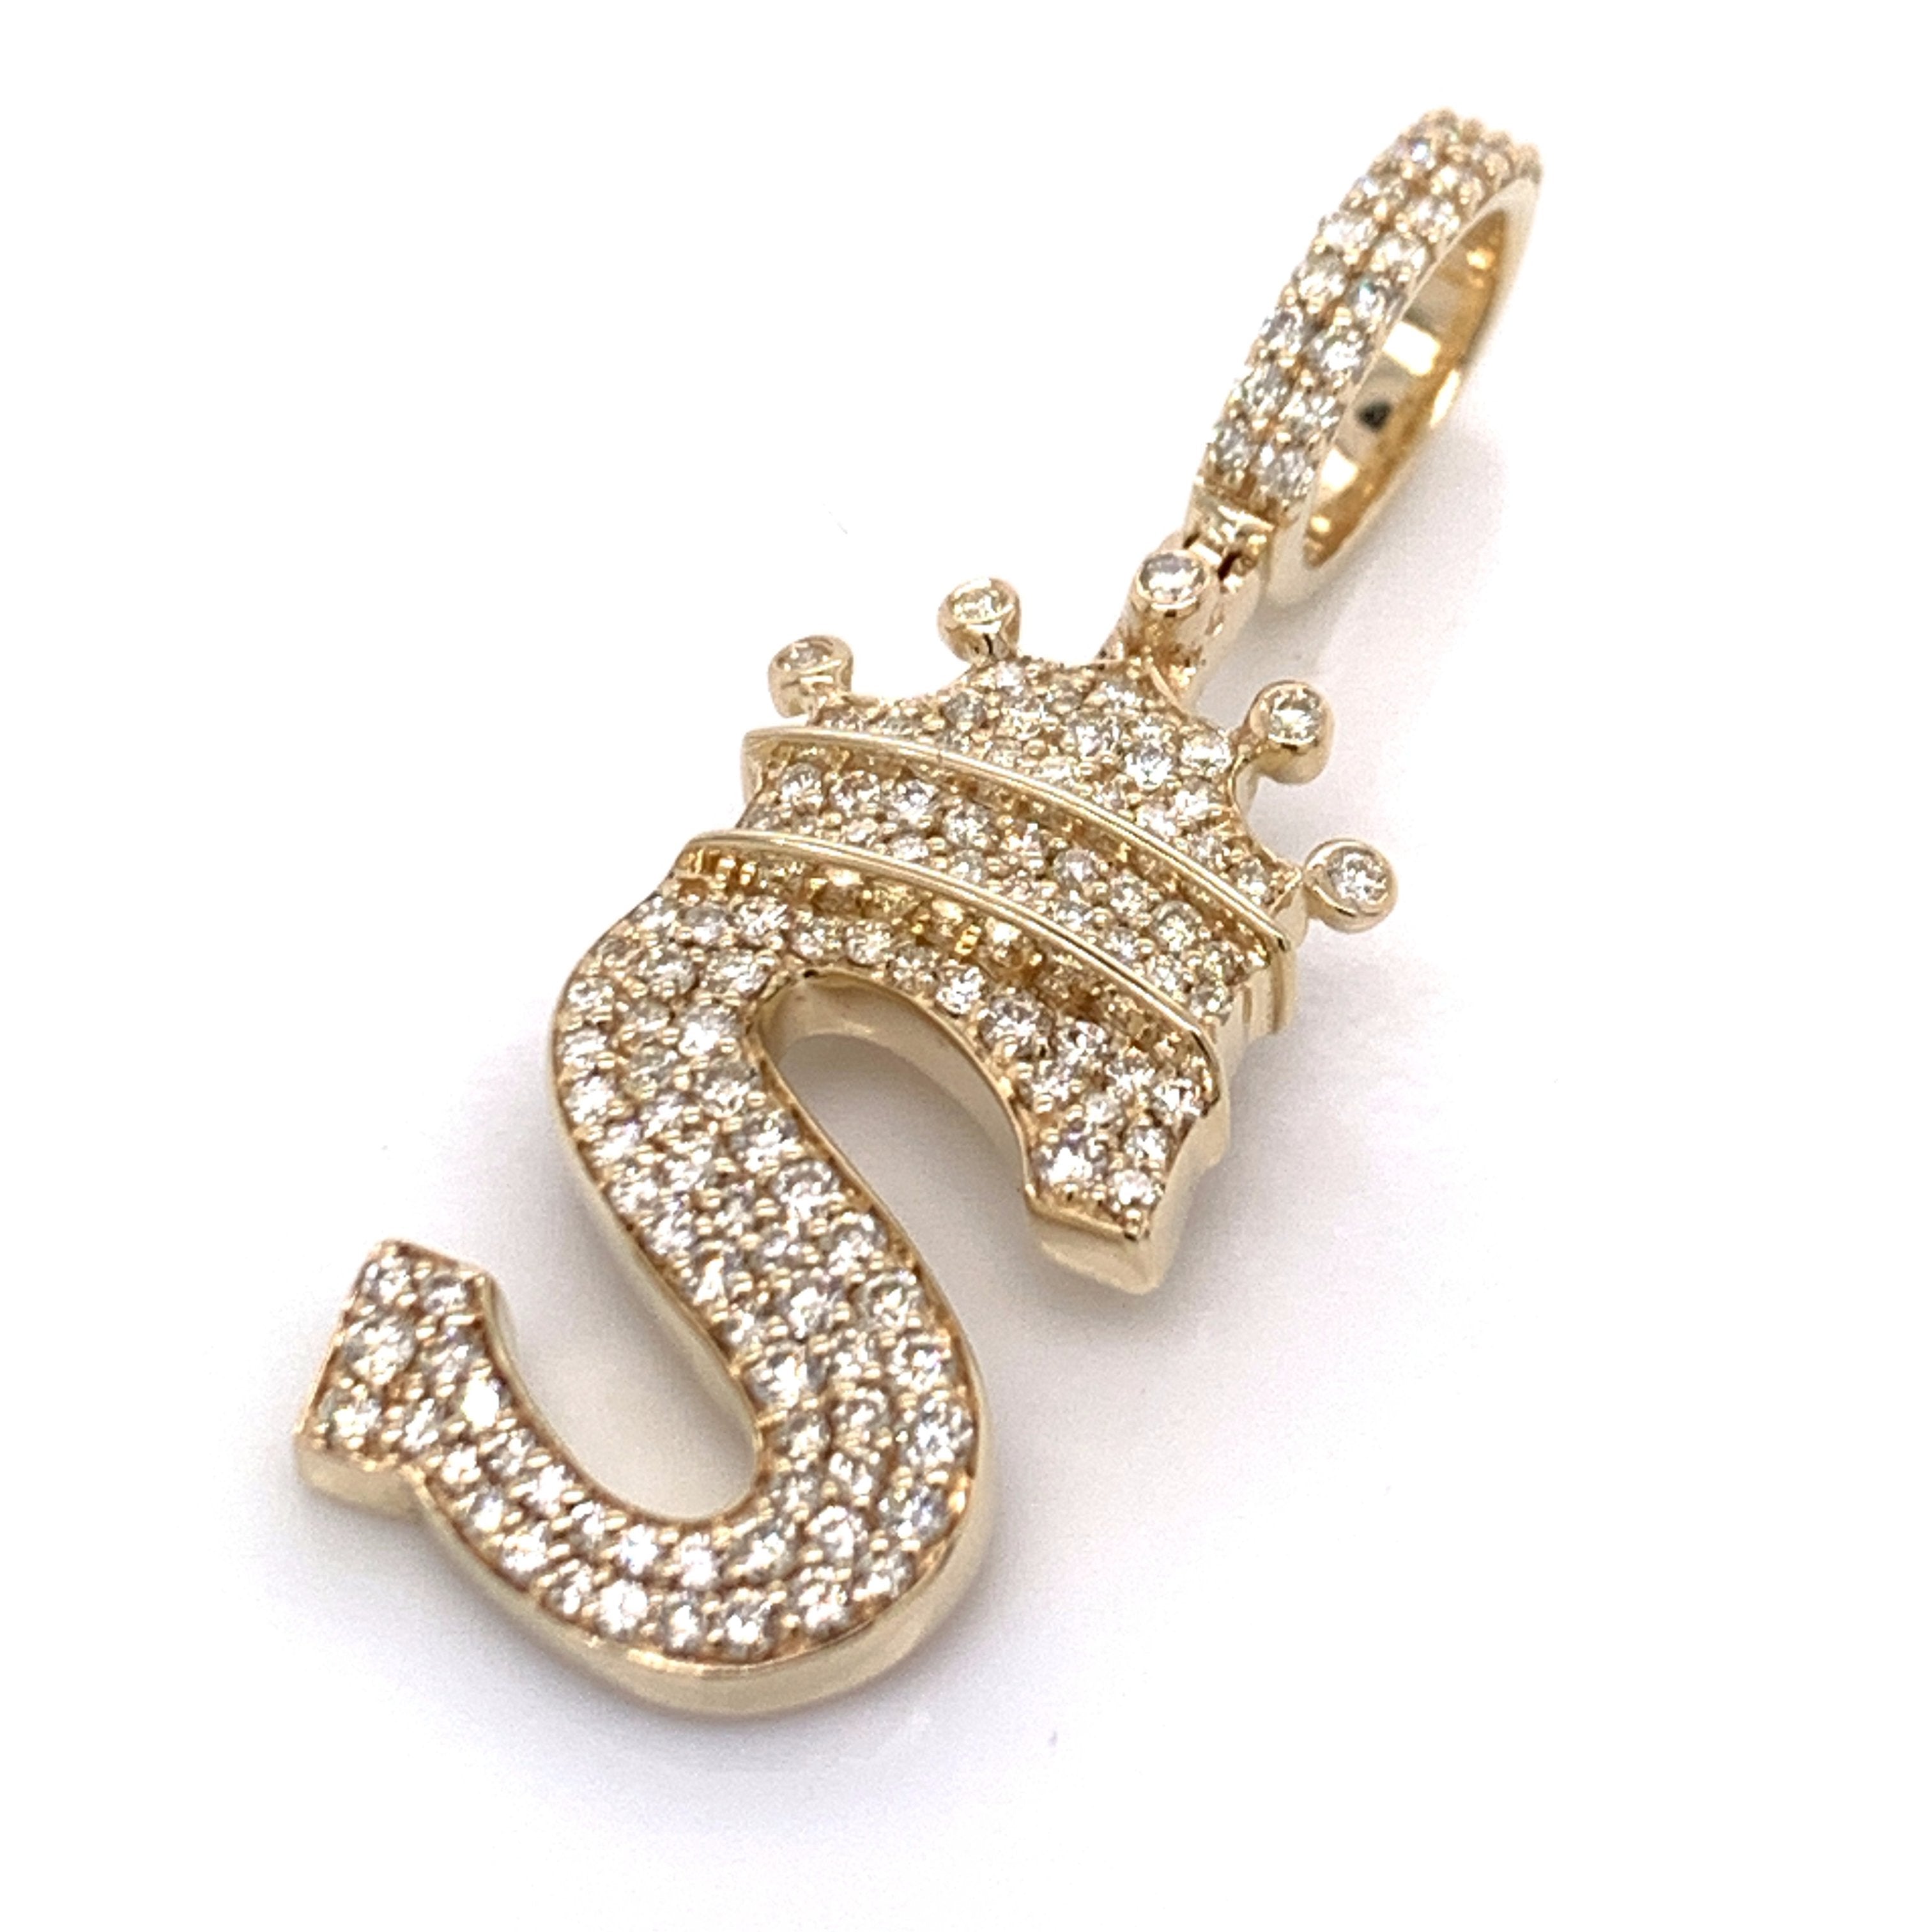 1.30 CT. Diamond Initial "S" Pendant in 10K Gold - White Carat Diamonds 